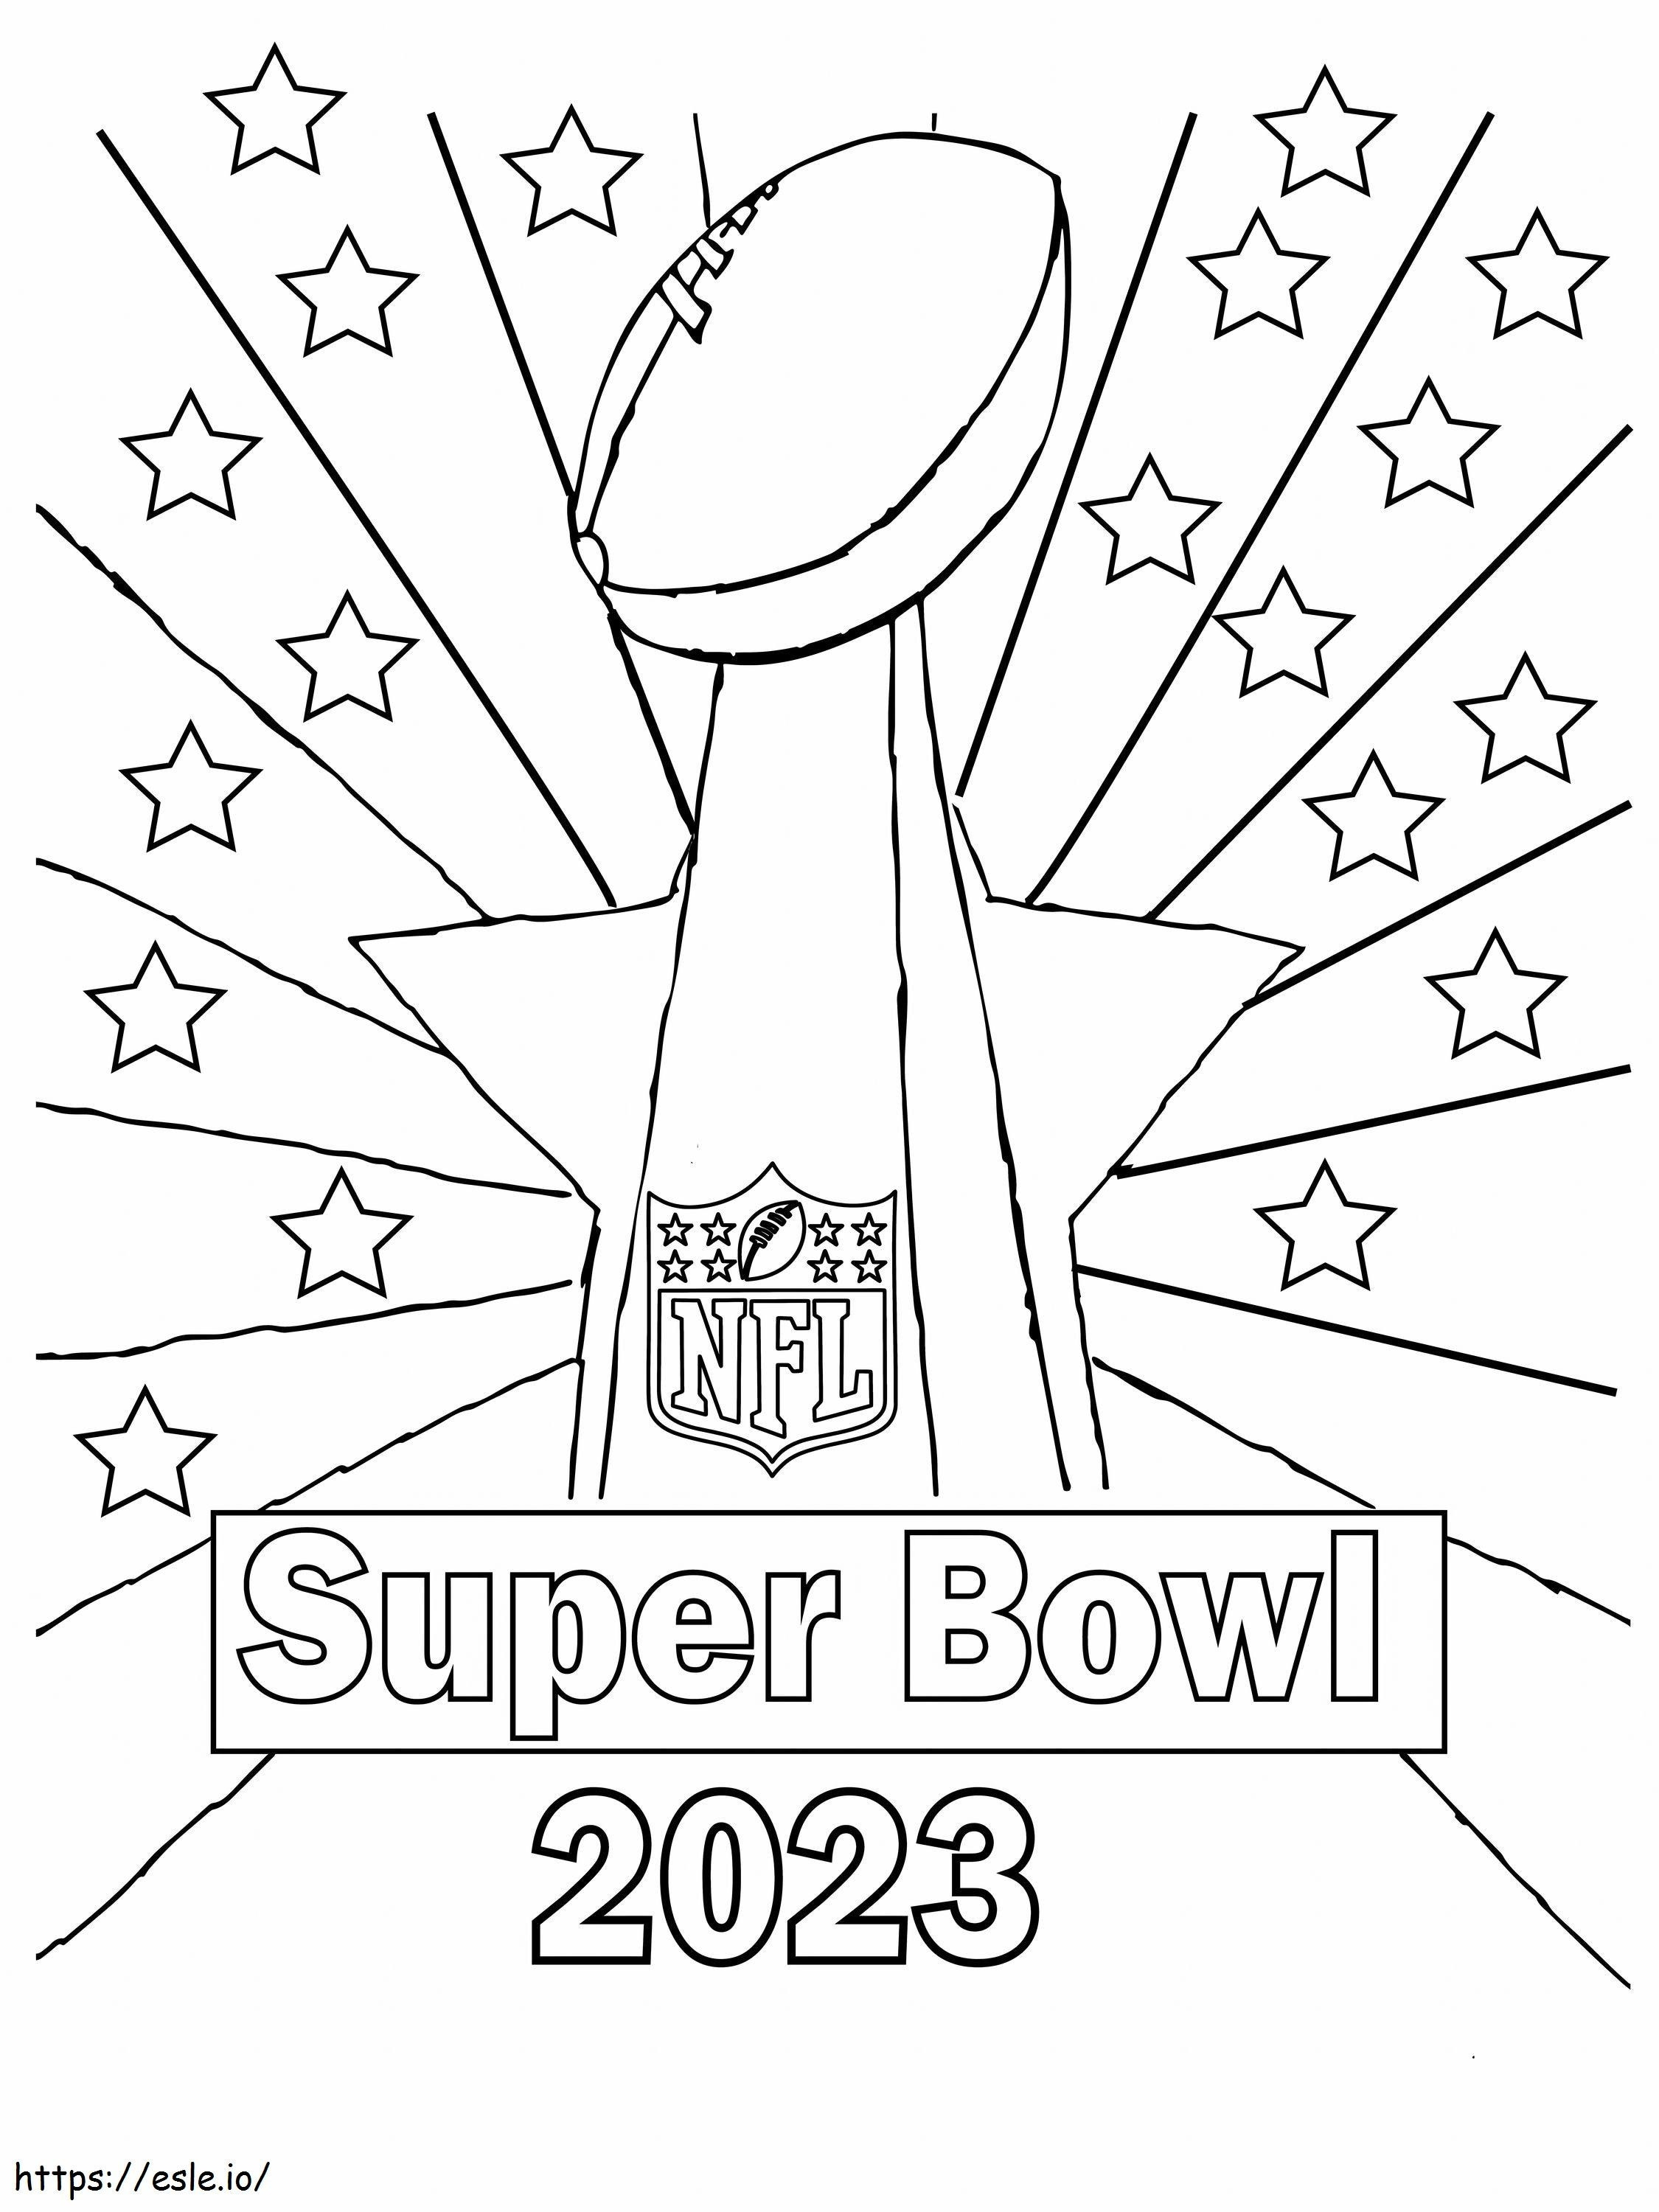 Super Bowl 2023 2 coloring page